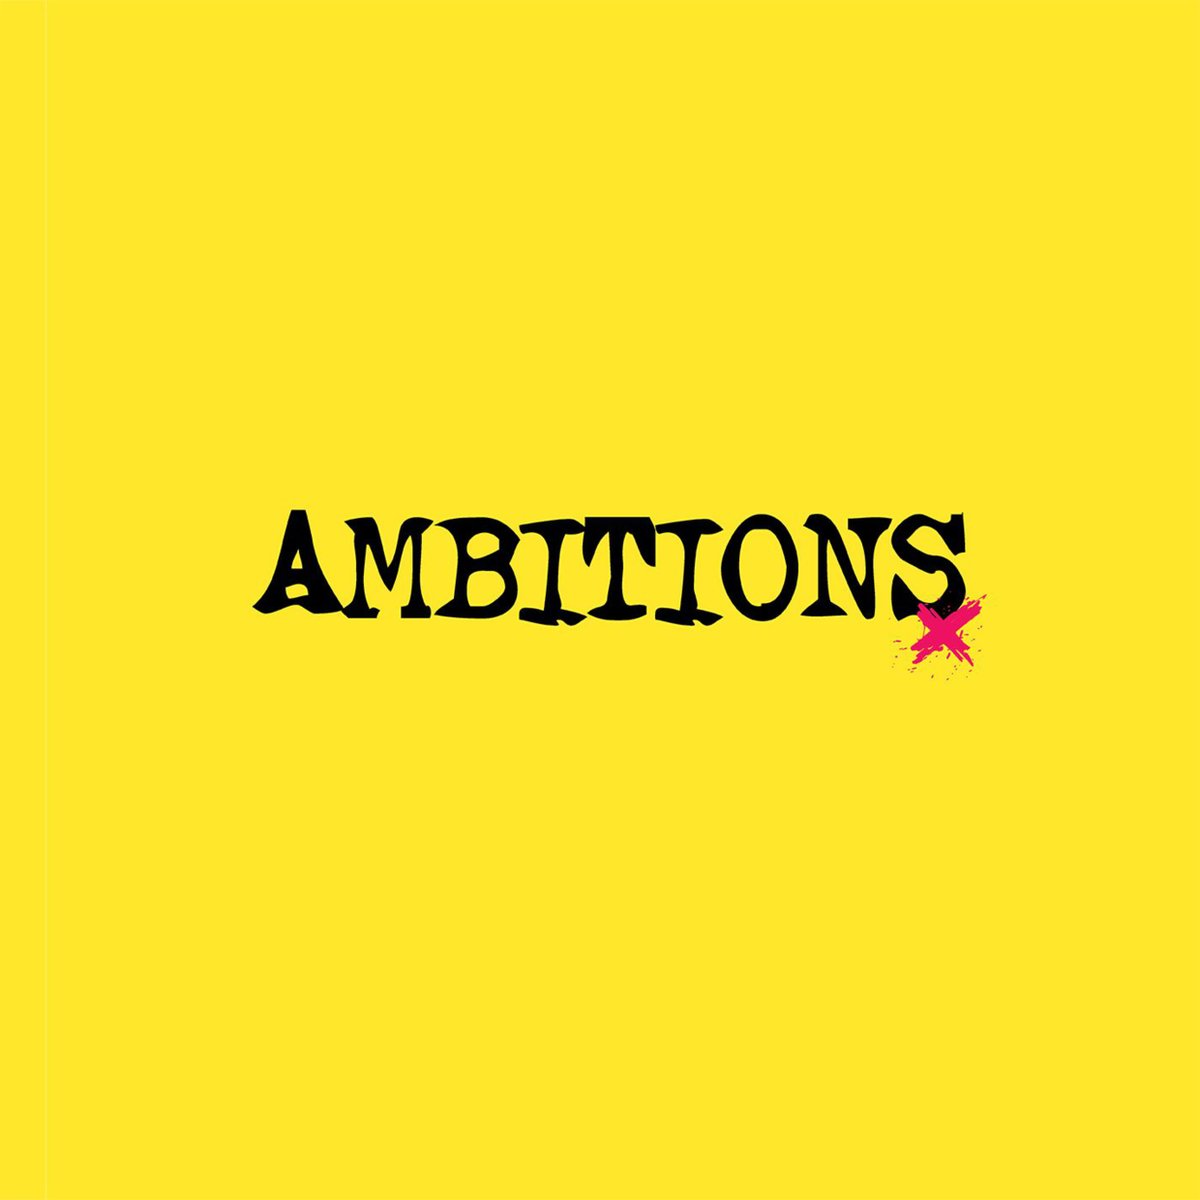 One Ok Rock 真駒内 ワンオク ライブ 9mm セトリ グッズ売り切れ 座席 Ambitions 17 札幌 レポ Tlクリップ